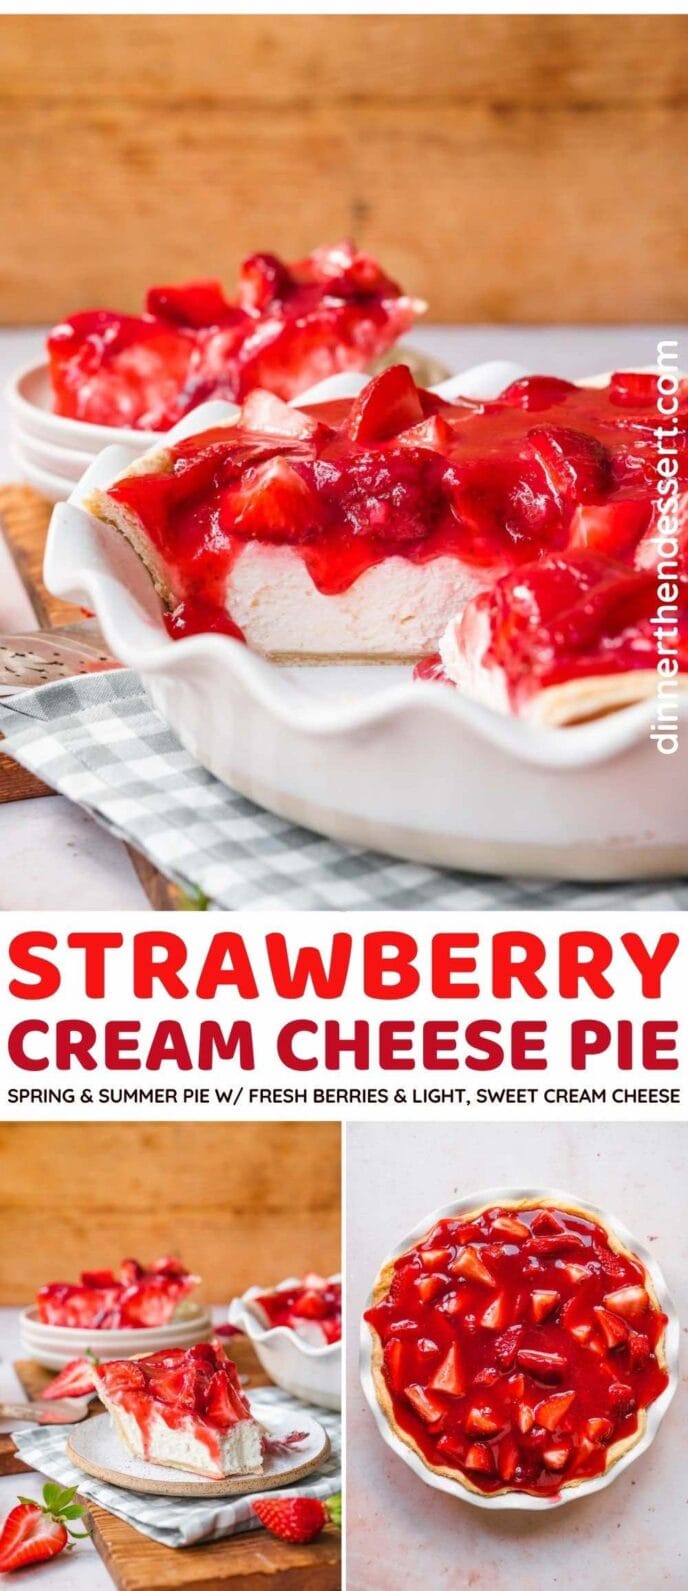 Strawberry Cream Cheese Pie collage